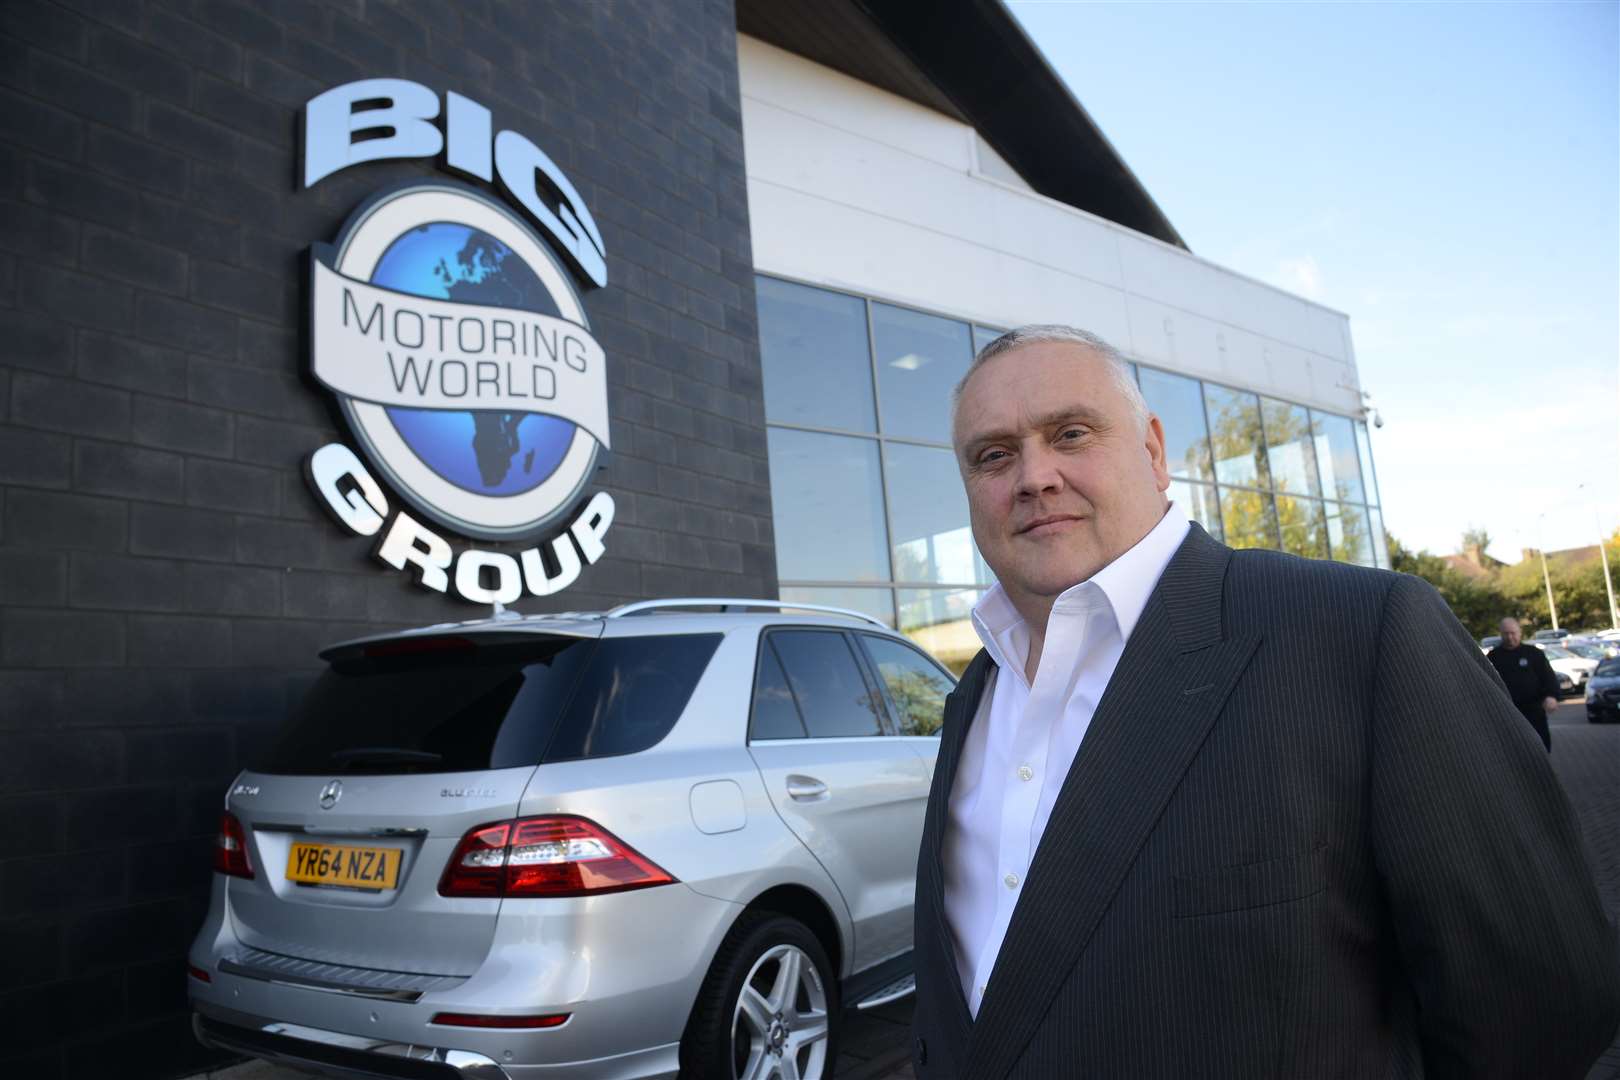 Big Motoring World chief executive Peter Waddell